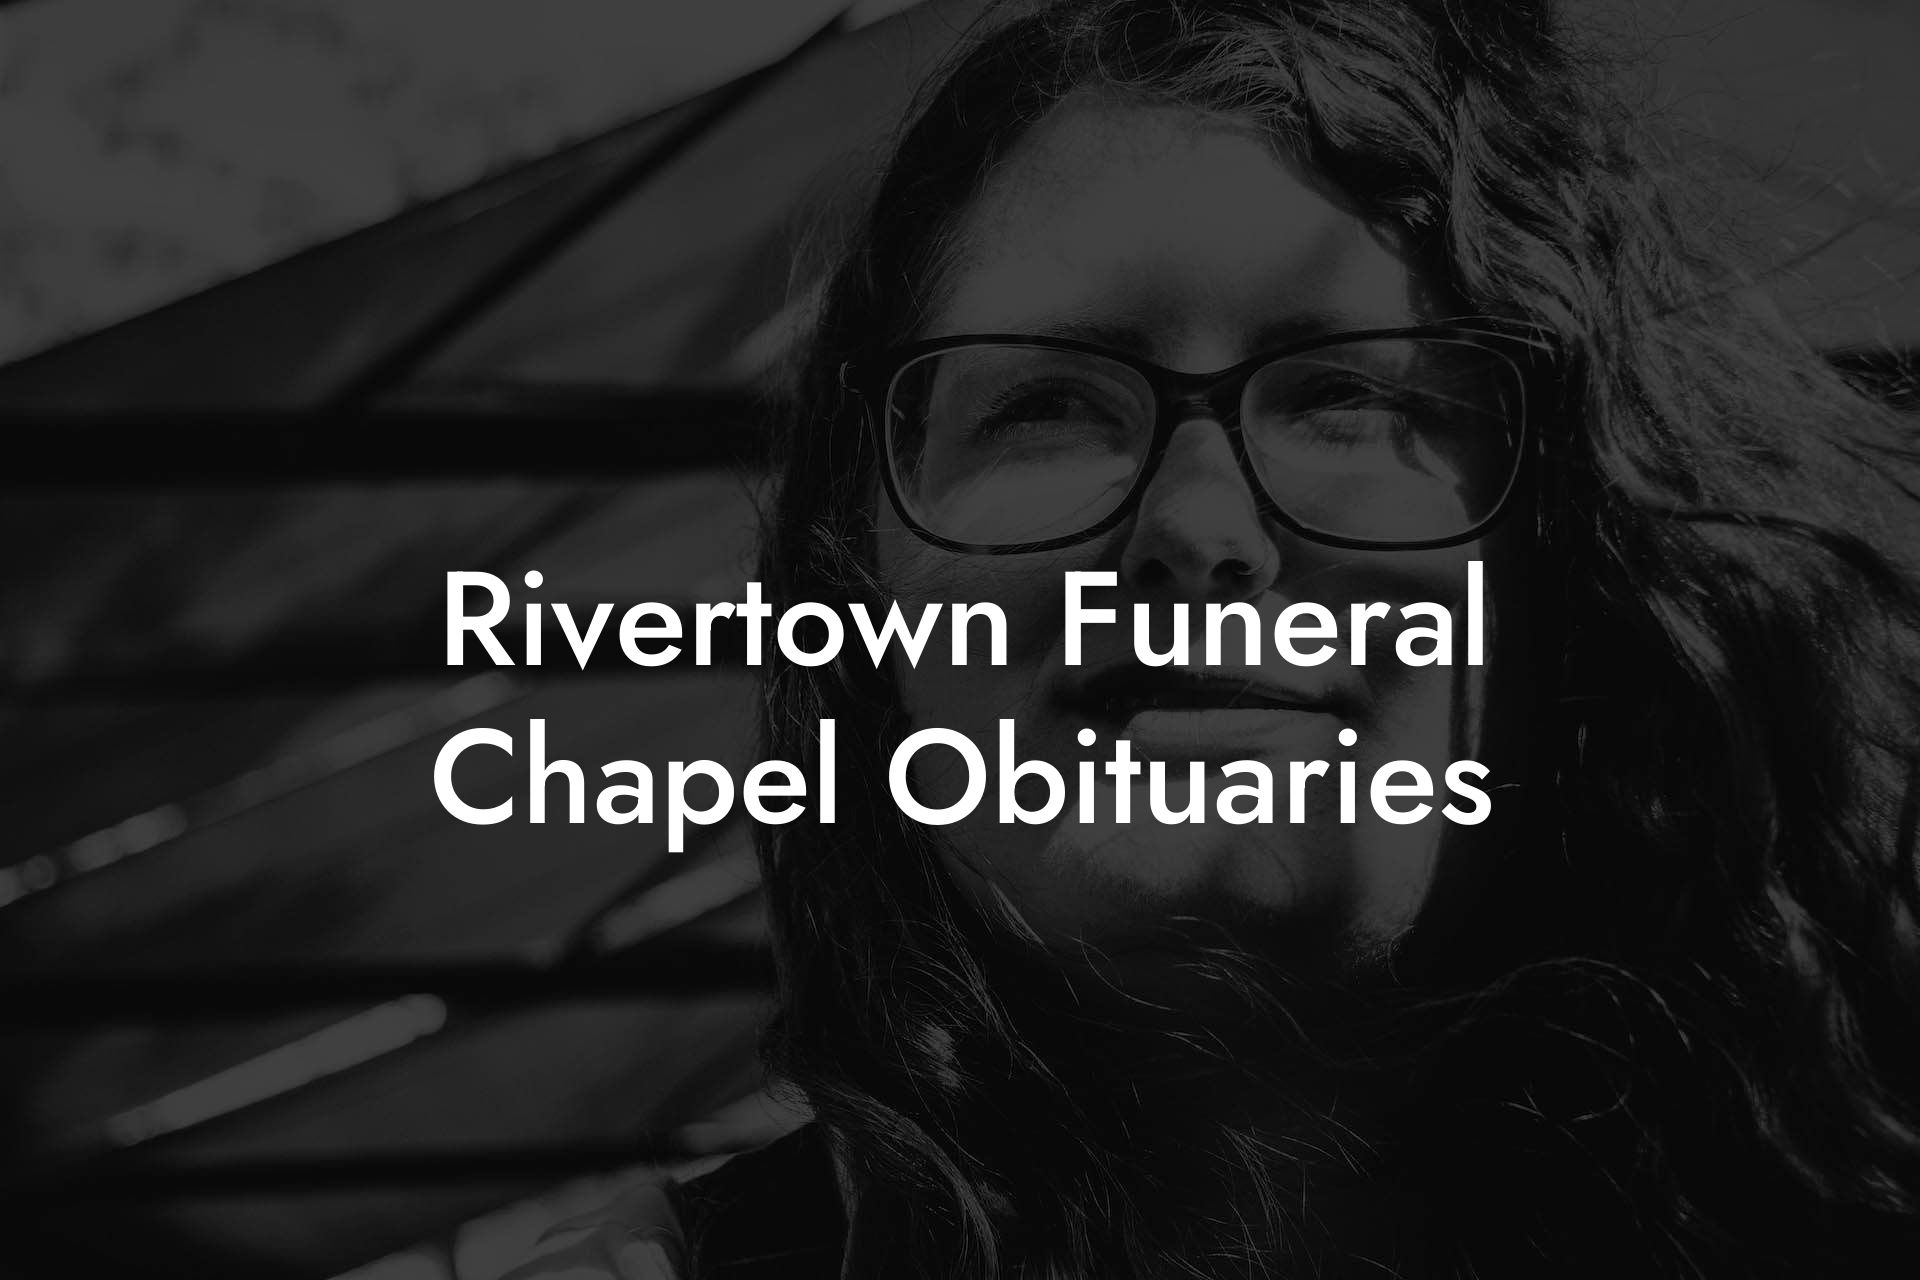 Rivertown Funeral Chapel Obituaries